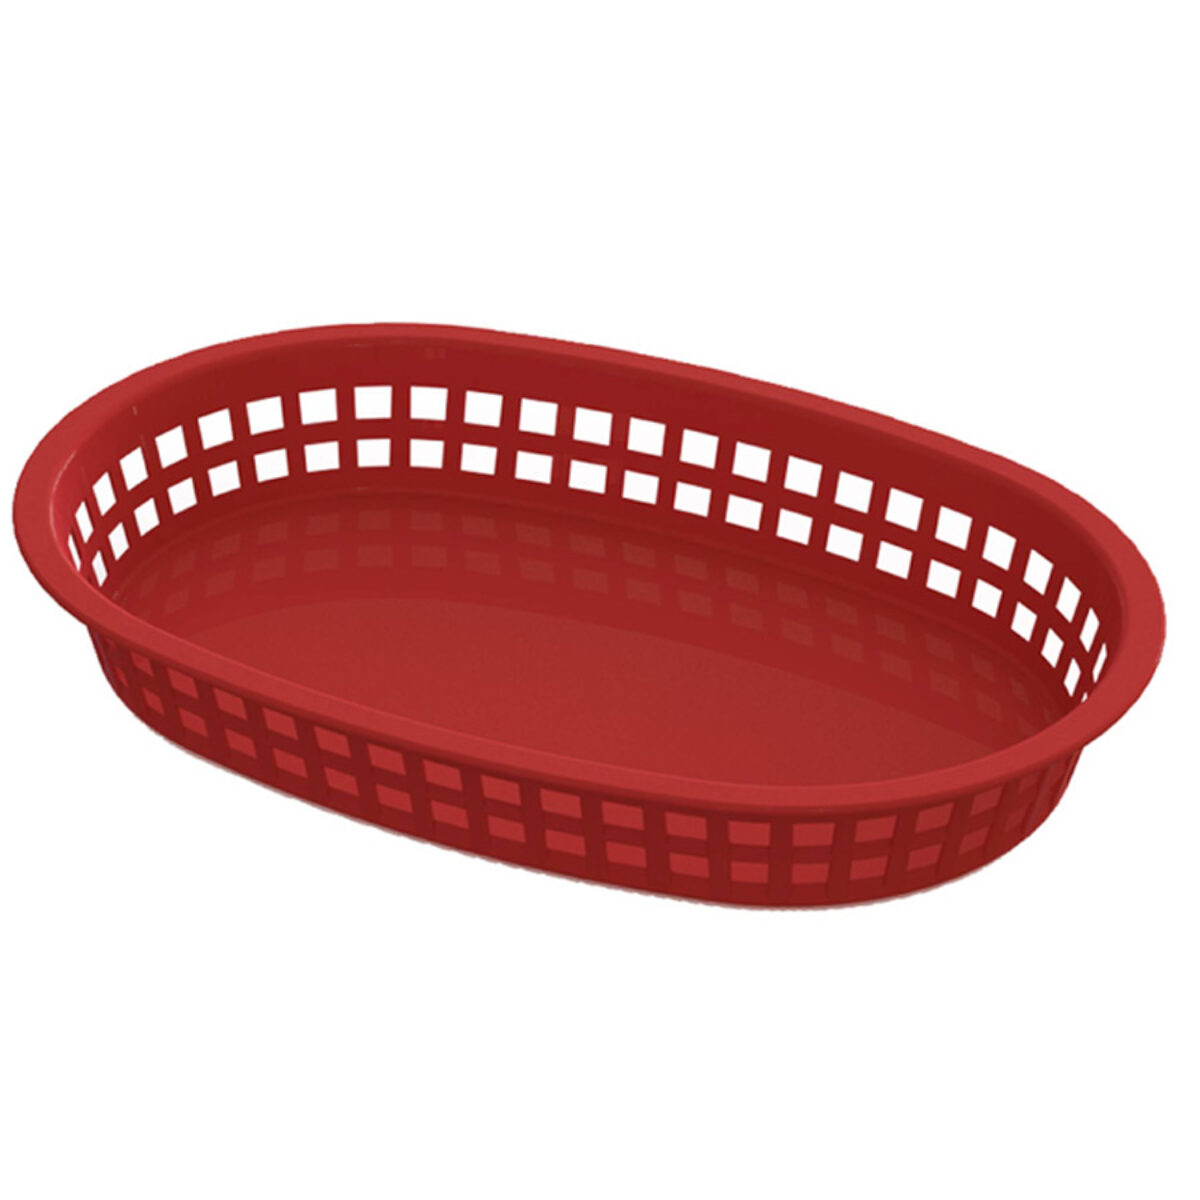 https://doyleshamrock.com/main/wp-content/uploads/schema-and-structured-data-for-wp/red-oblong-food-serving-basket-1200x1200.jpg